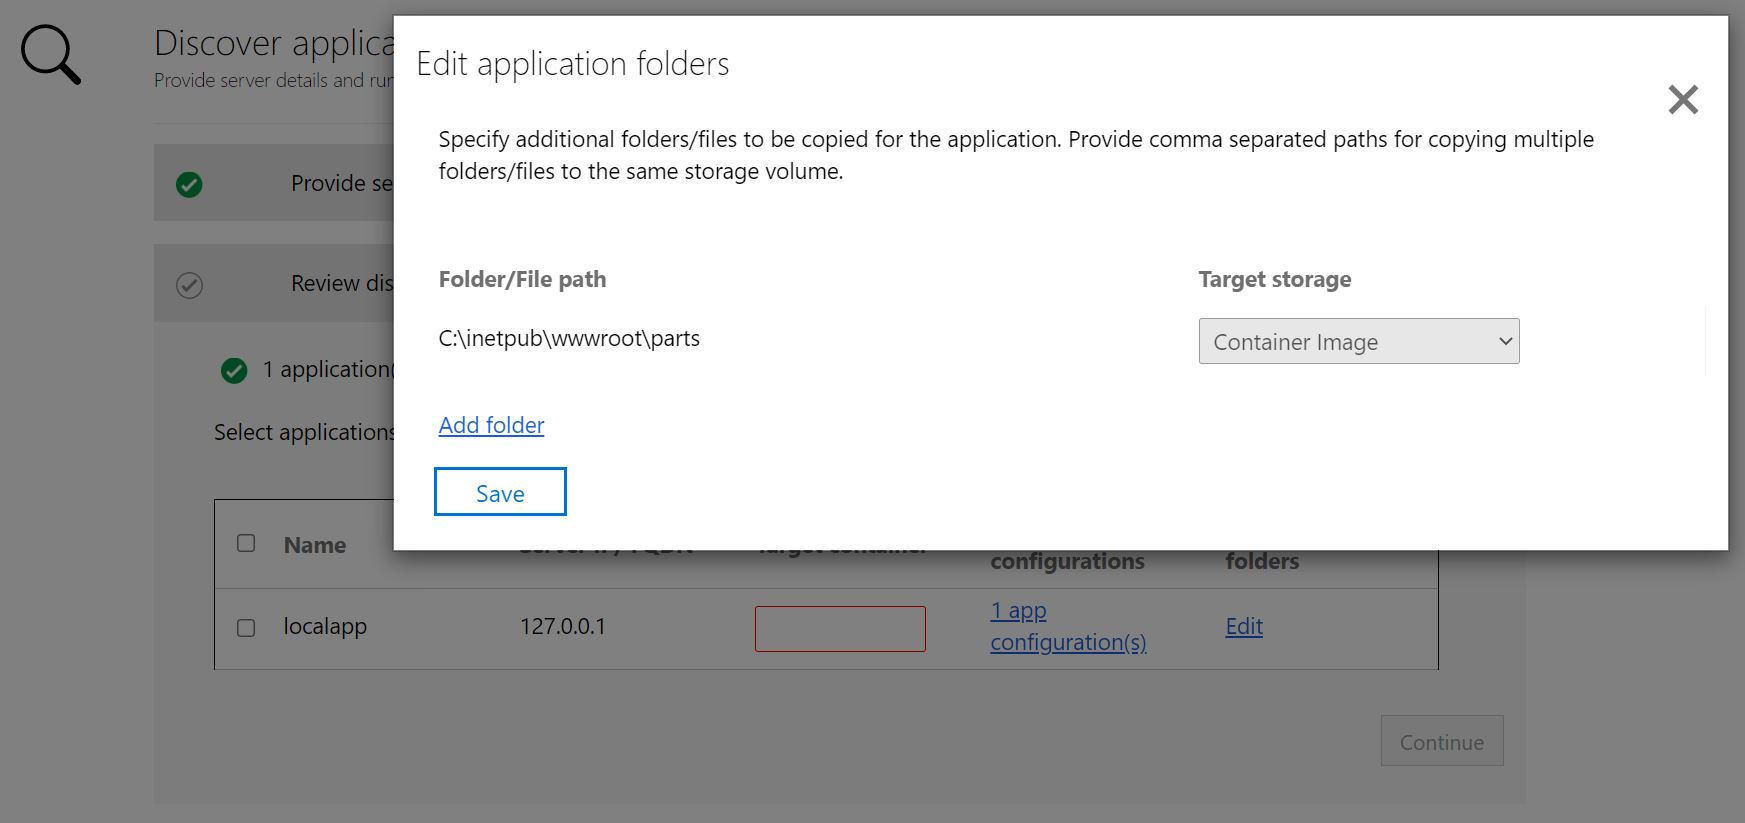 Screenshot that shows the Edit application folders window.